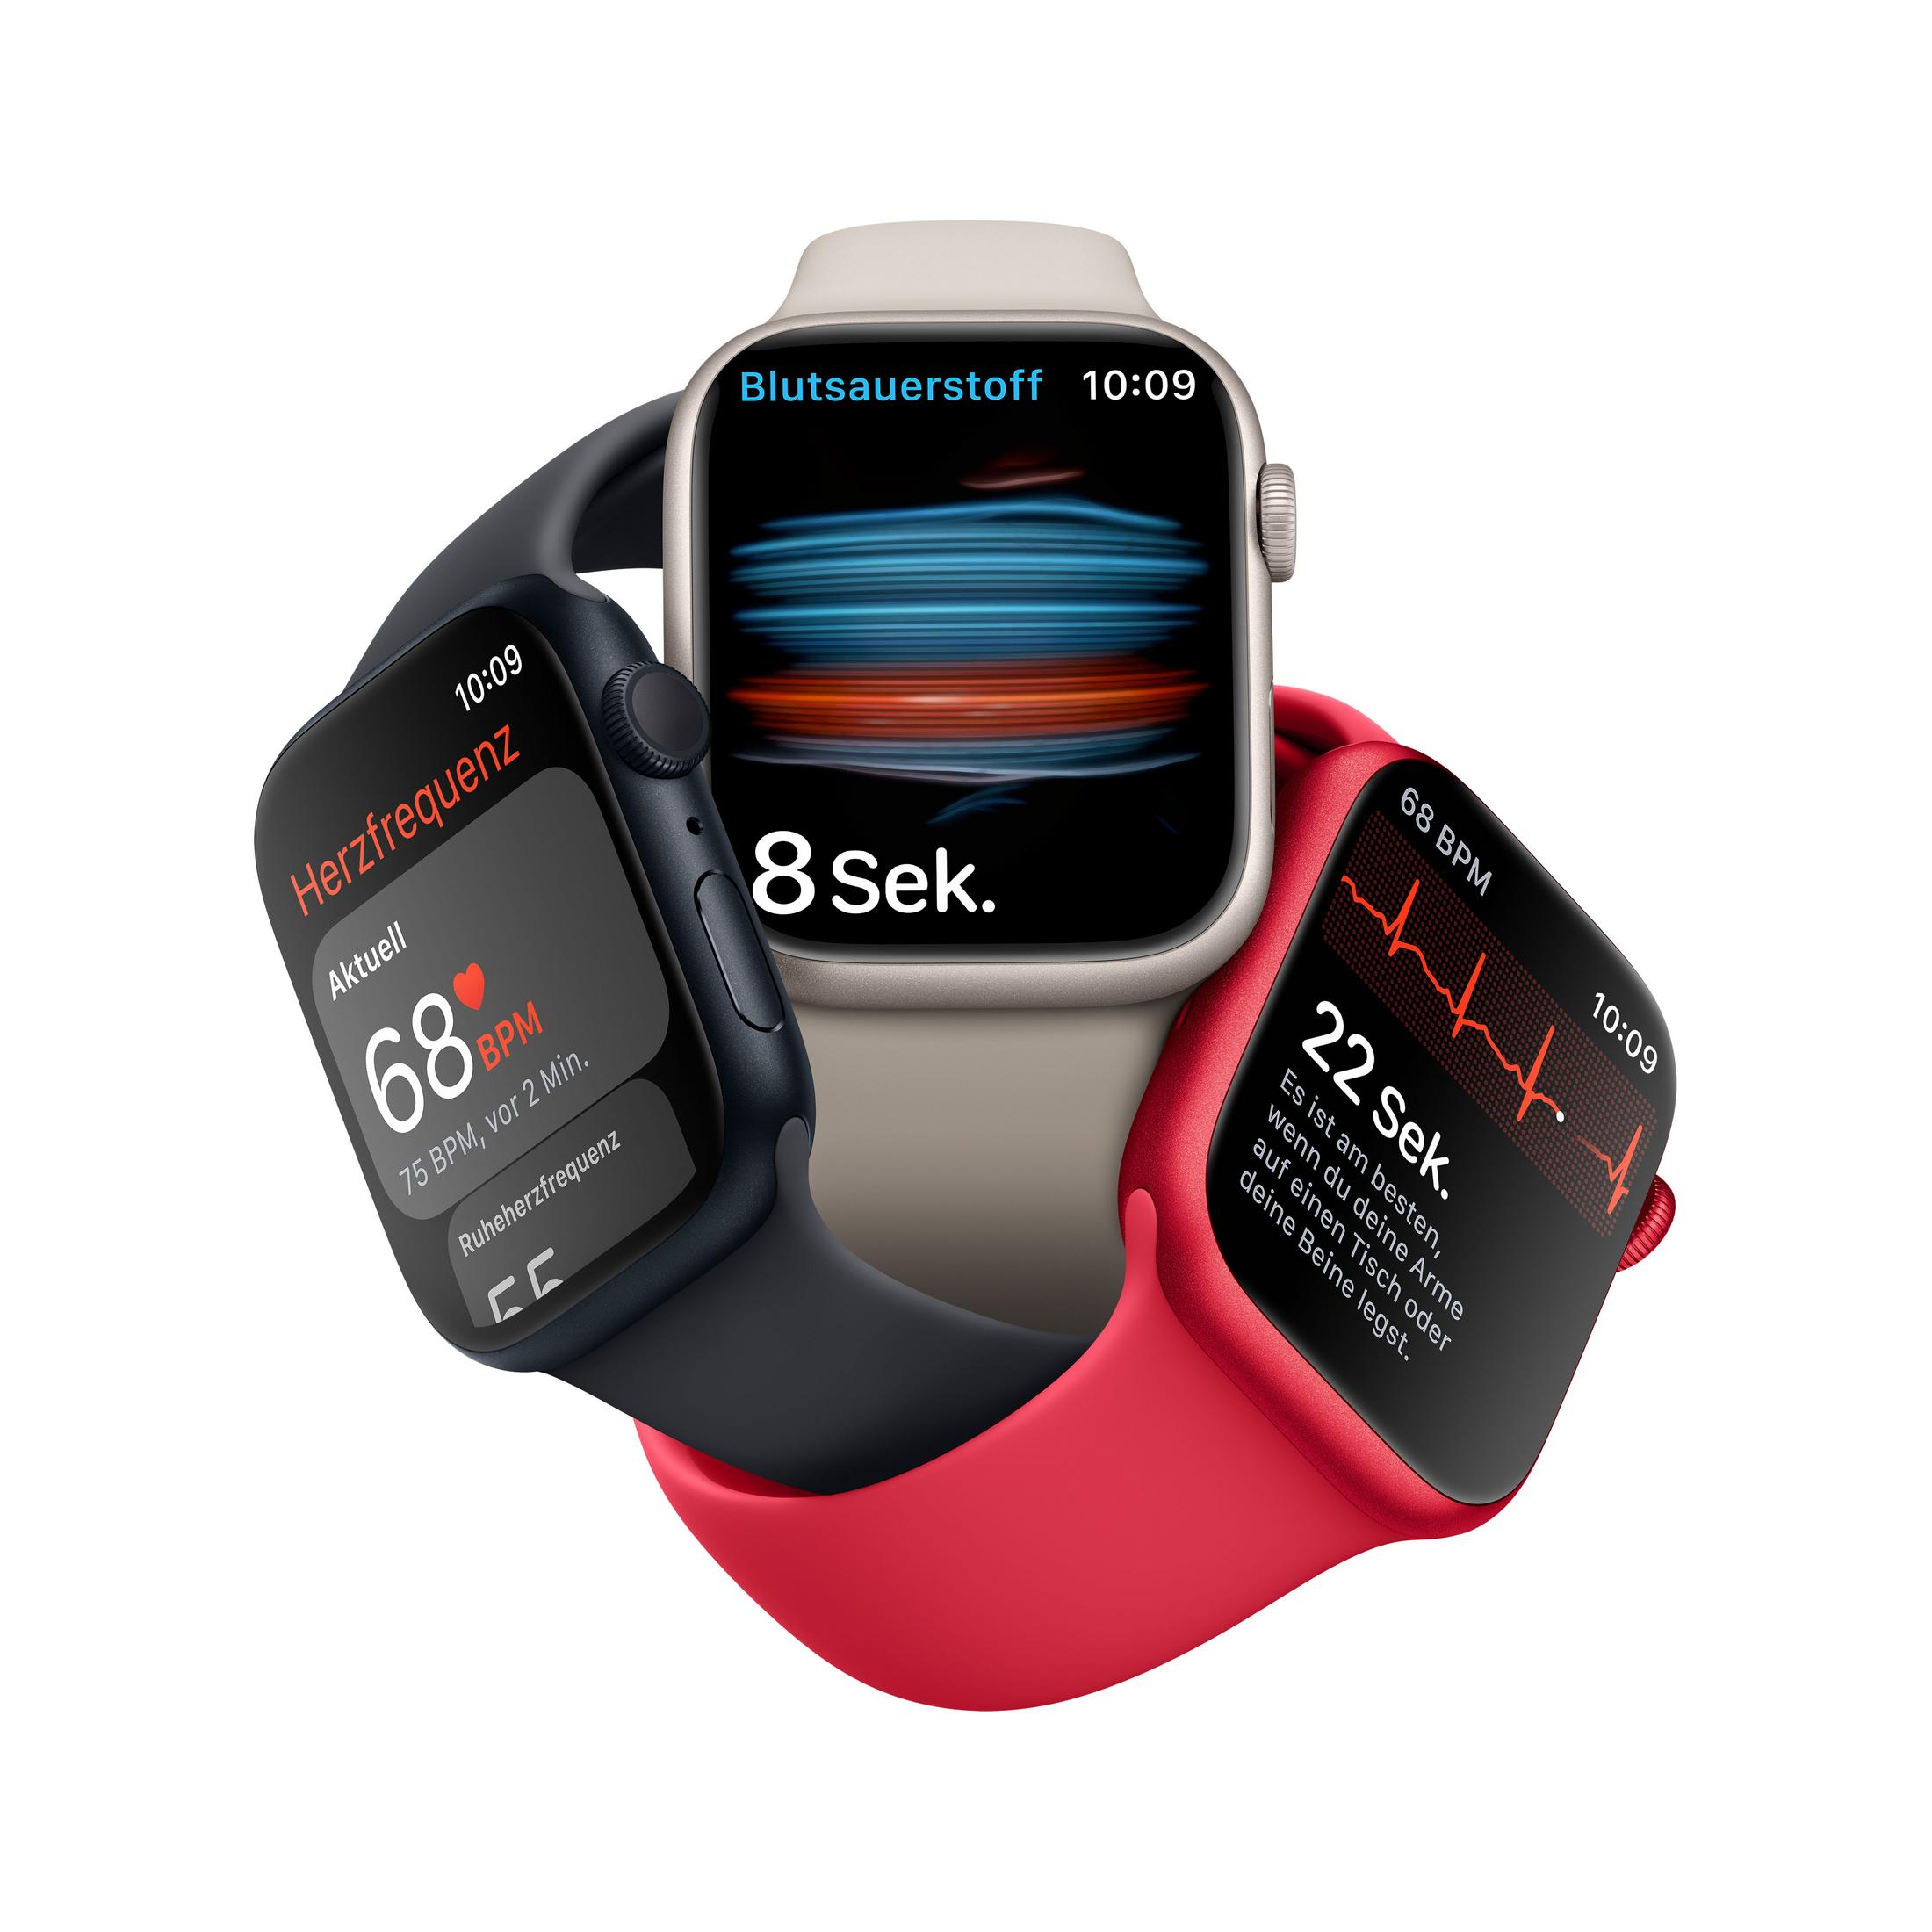 APPLE S8 GPS RED Gehäuse: (PRODUCT)RED W ALU Smartwatch RED - SPORT (PRODUCT)RED, Aluminium Fluorelastomer, 220 140 mm, Armband: 45 REG